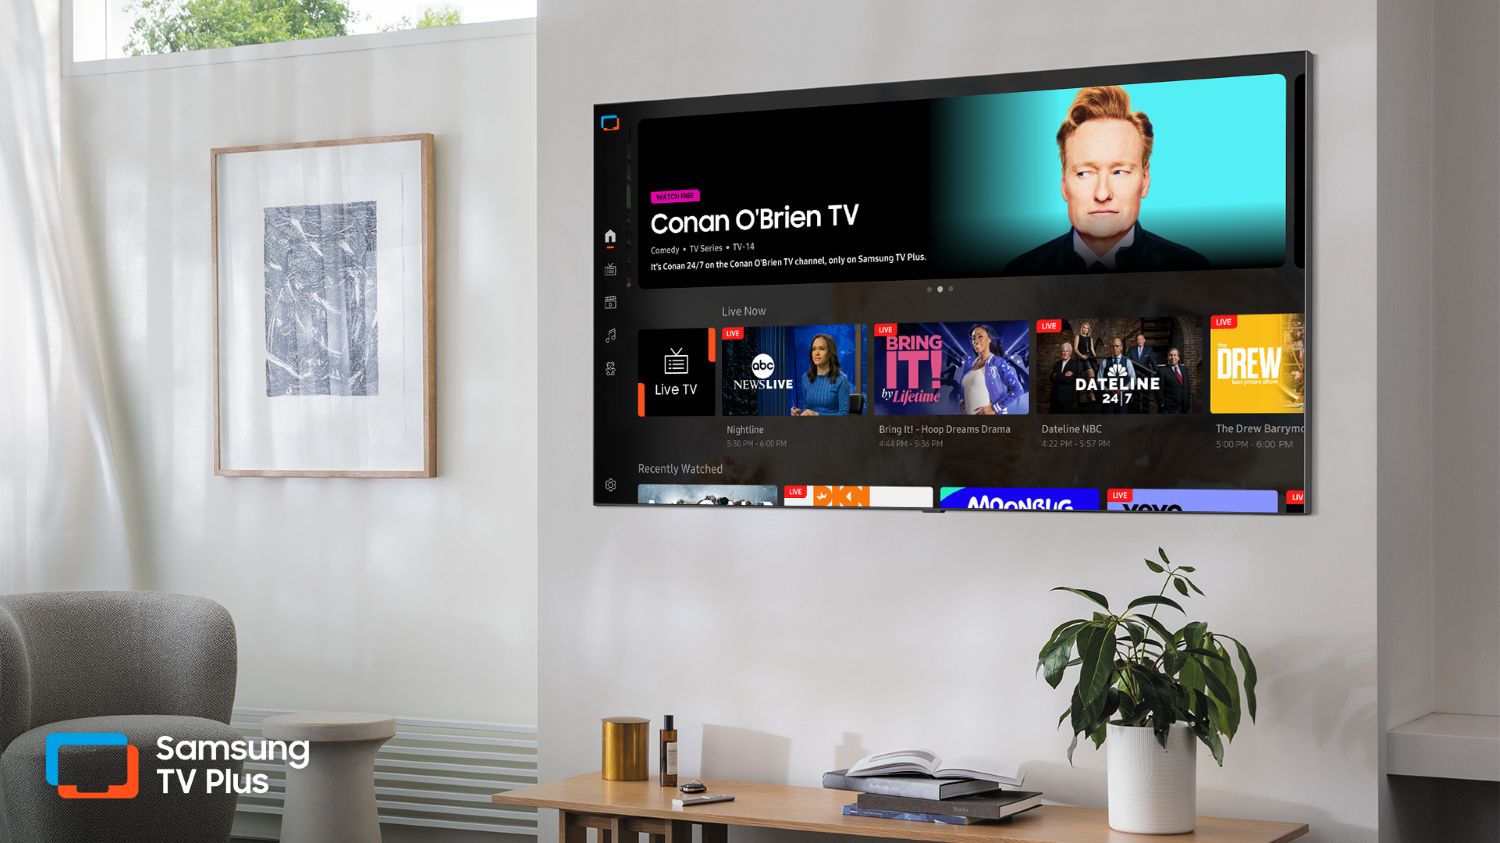 Samsung TV Plus smart TV user interface